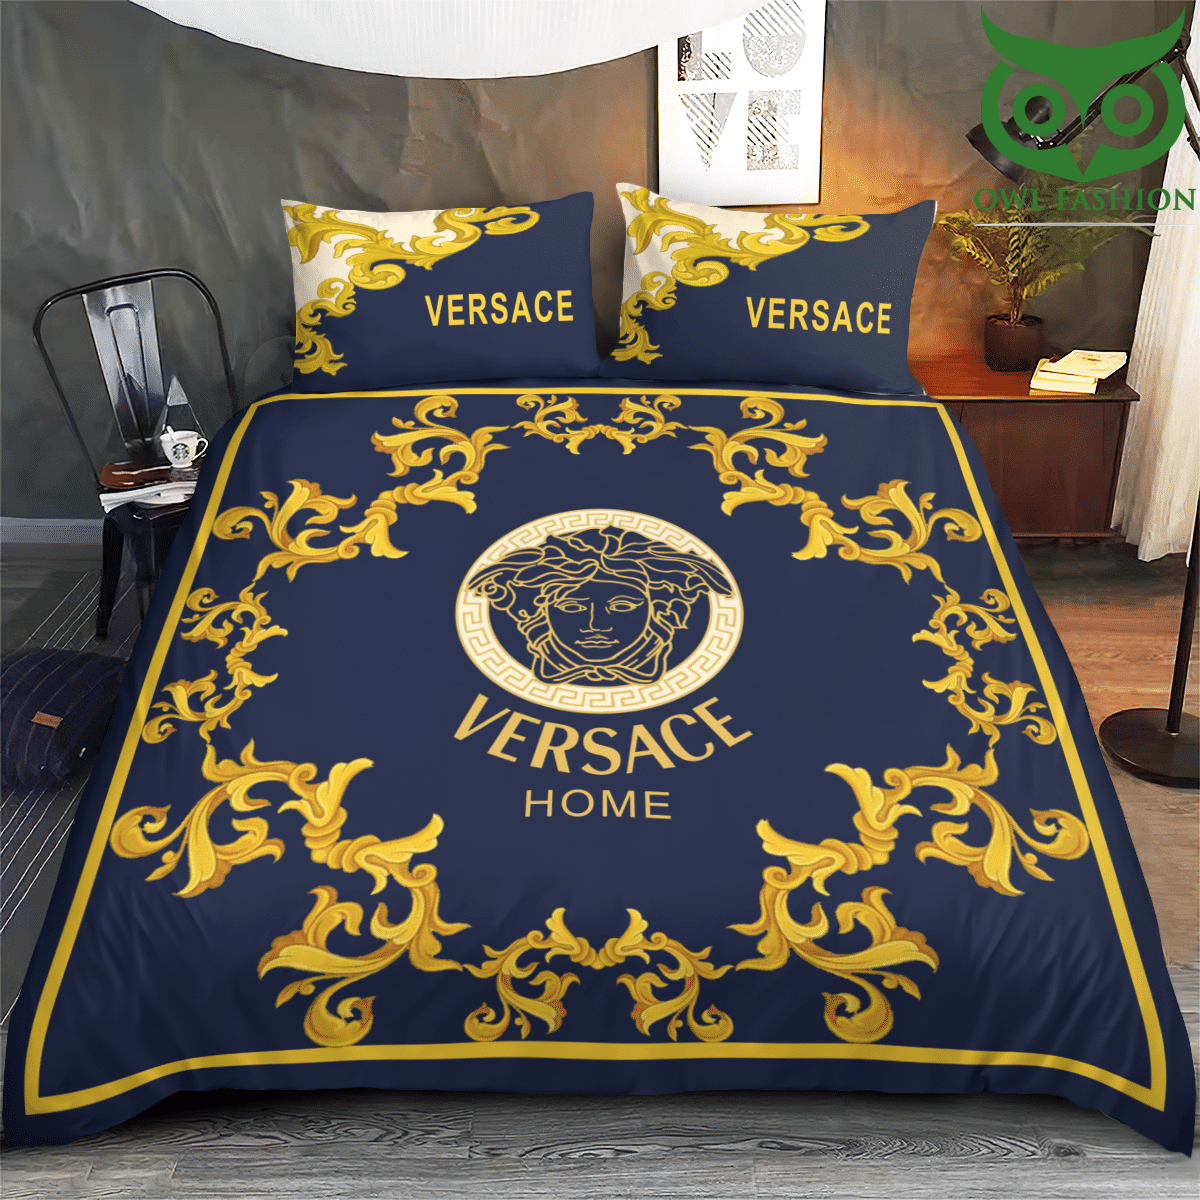 Versace Home royal bedding set